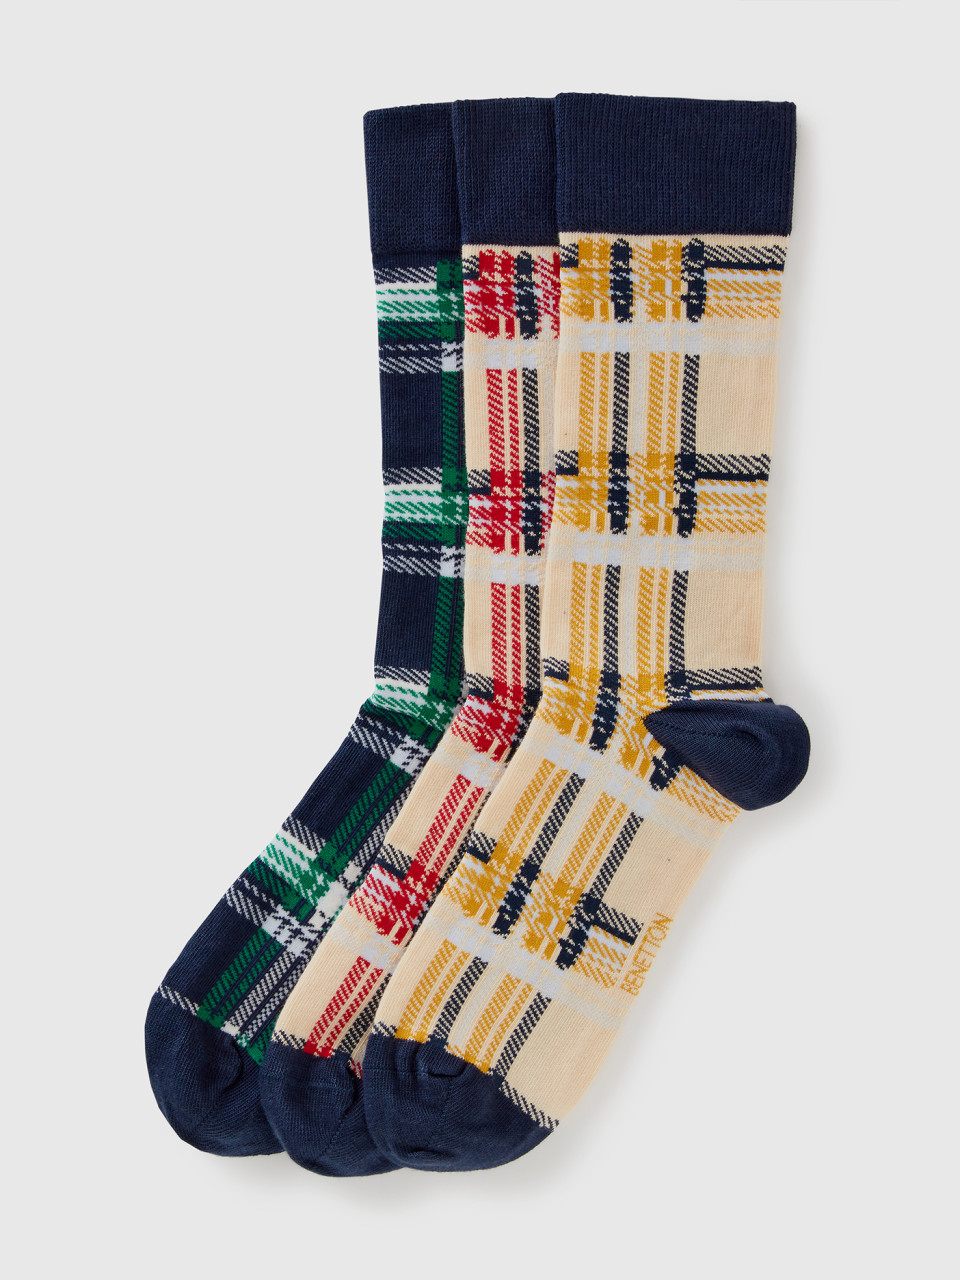 Benetton, Long Tartan Socks, Multi-color, Men